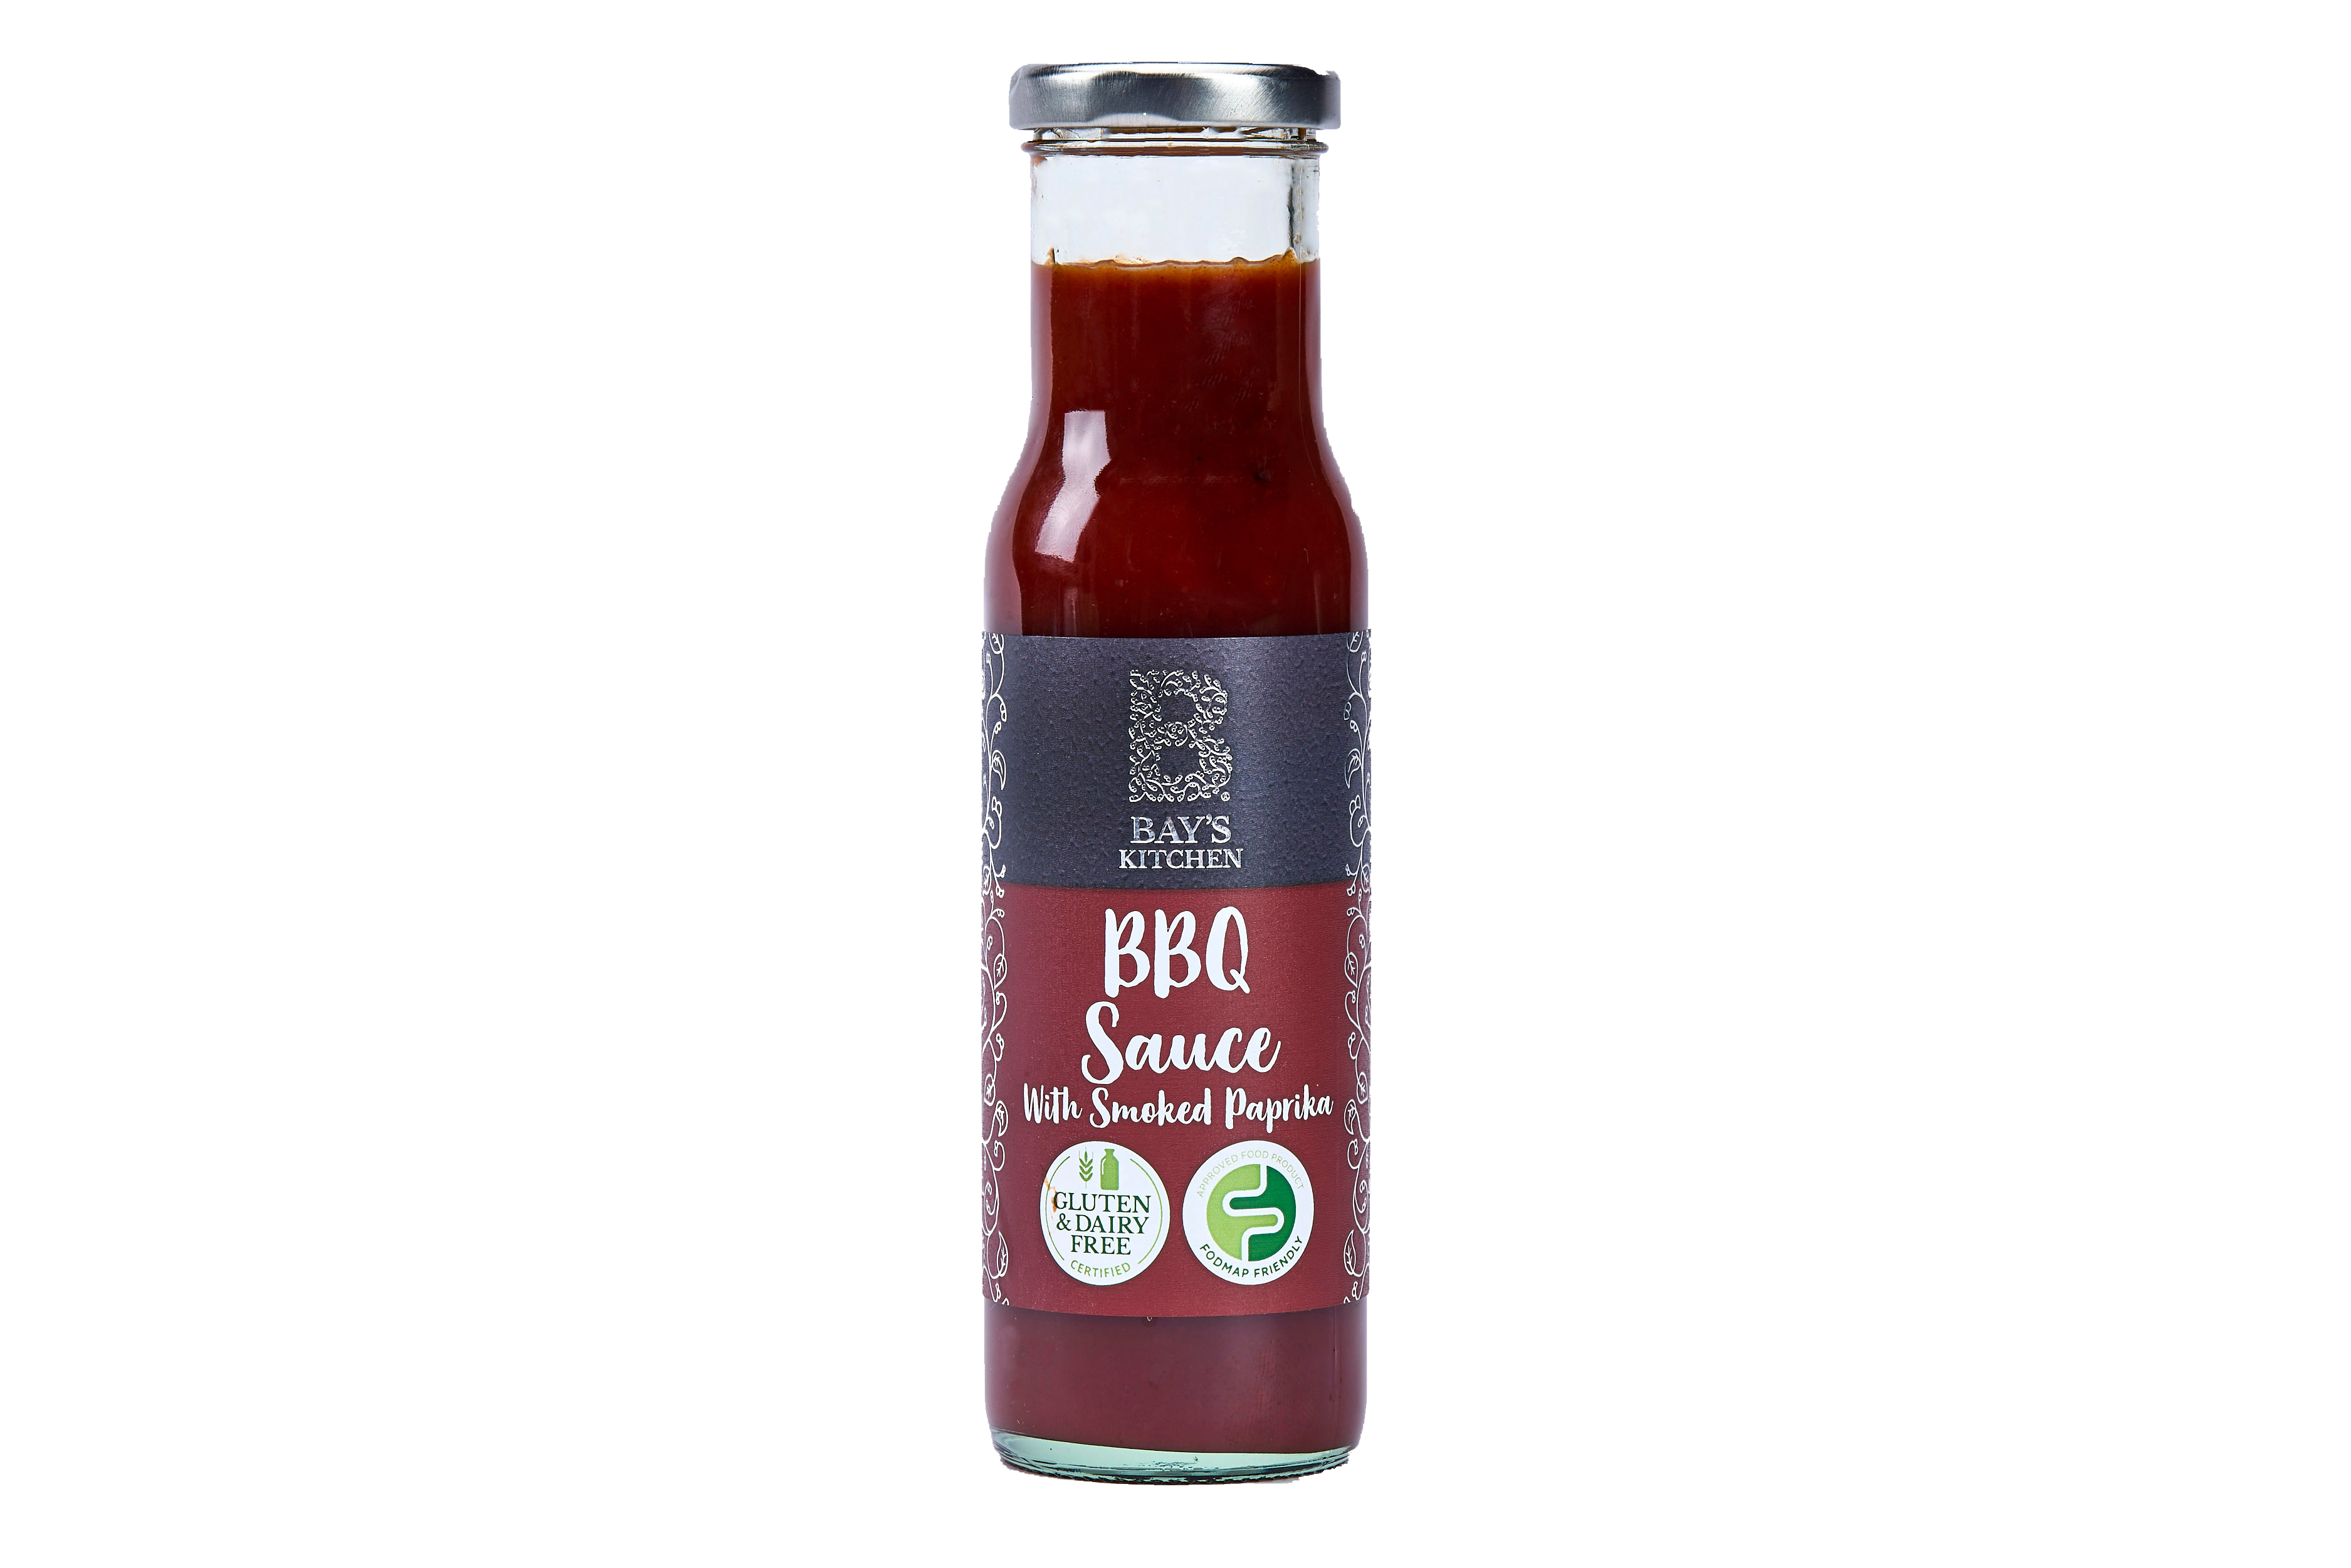 Bay’s Kitchen BBQ Sauce with Smoked Paprika